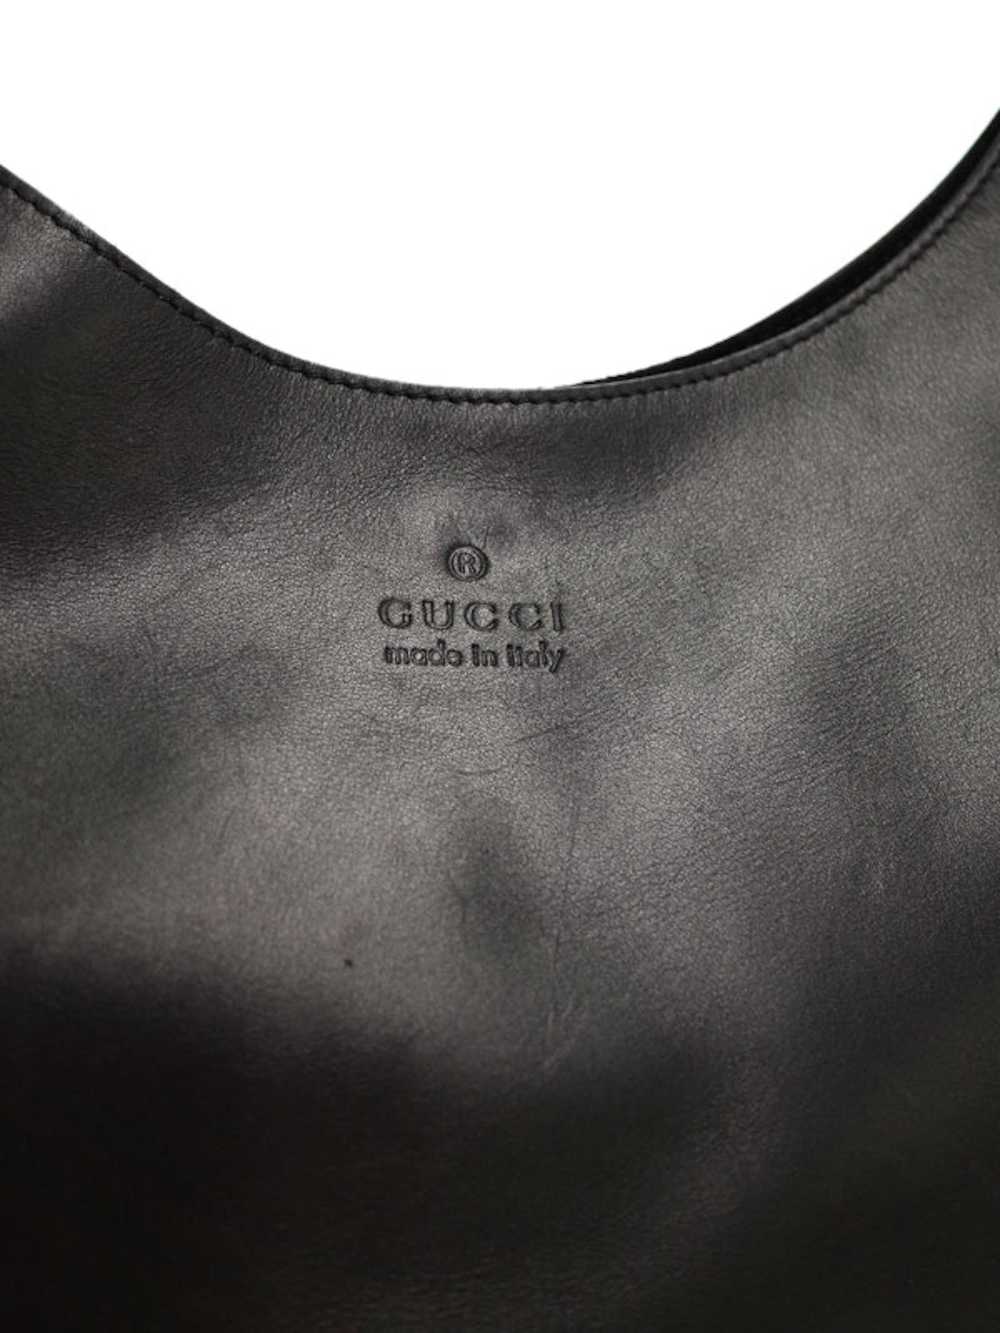 Gucci Gucci Shoulder Bag Black - image 4